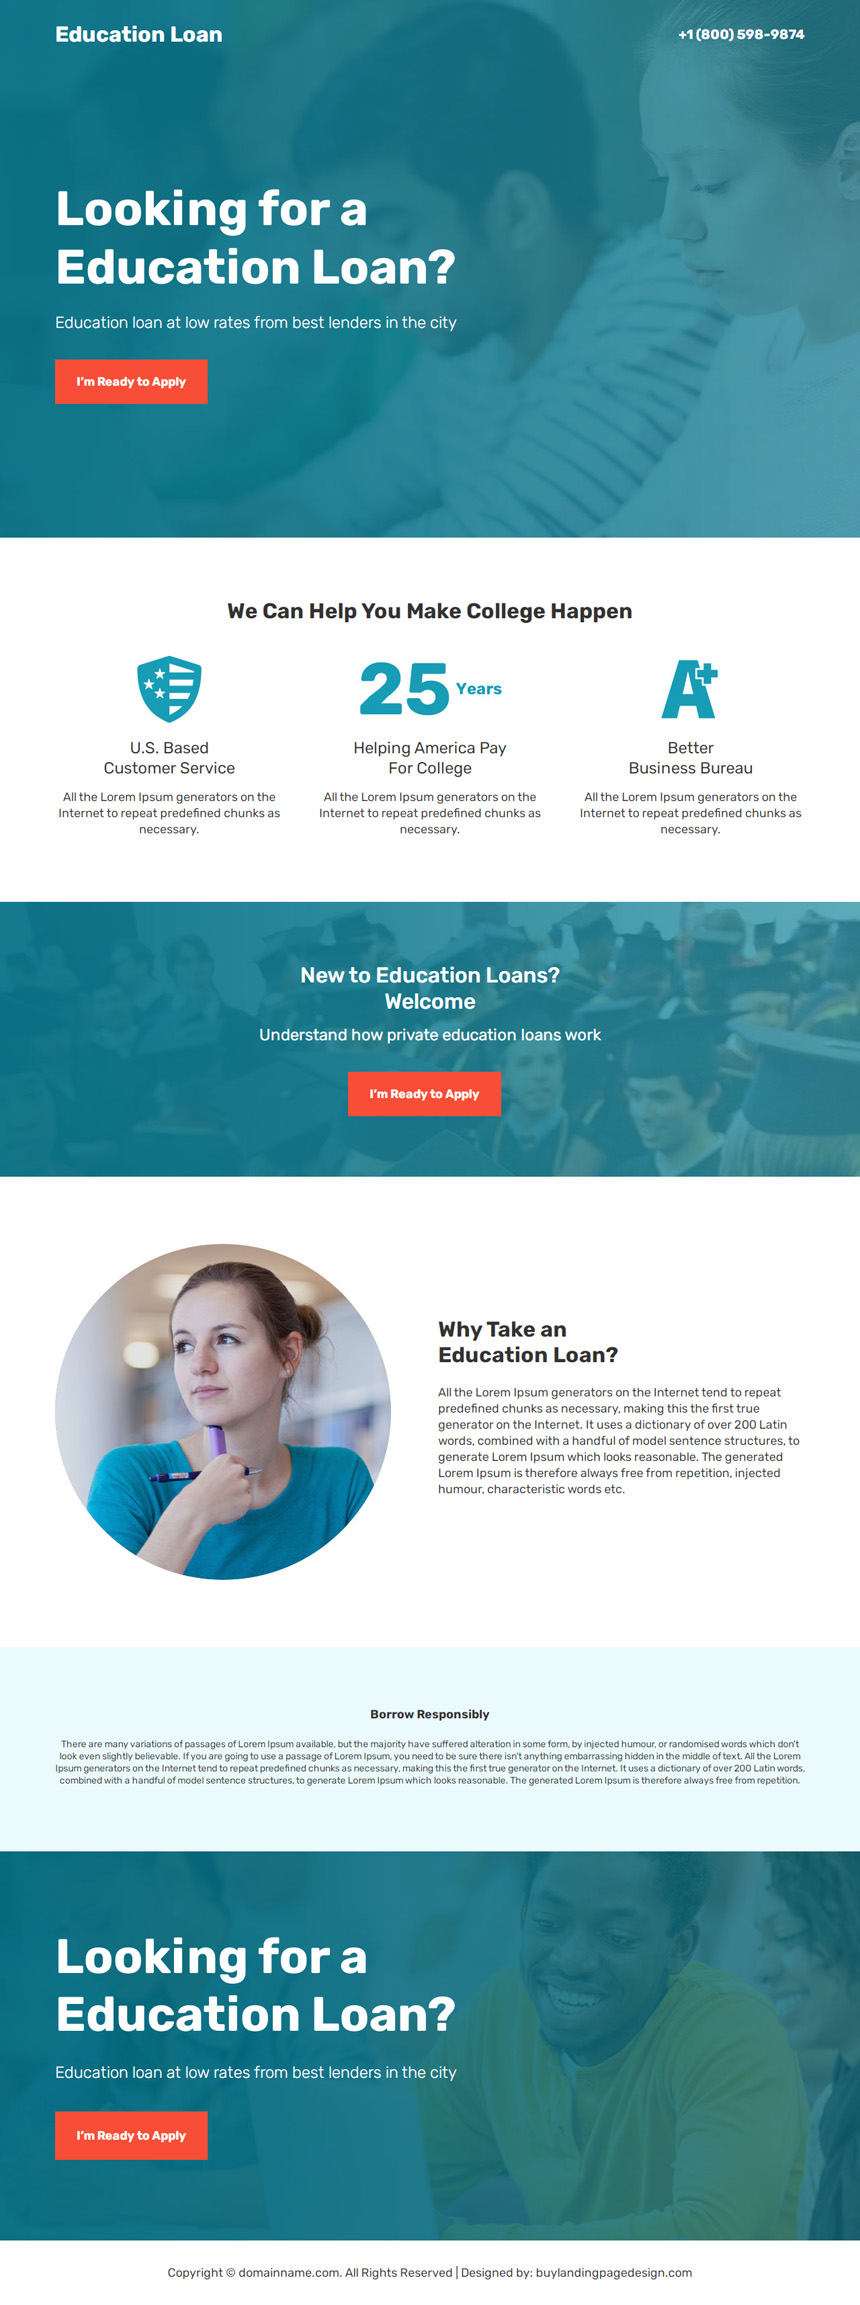 education loan lead capture landing page design